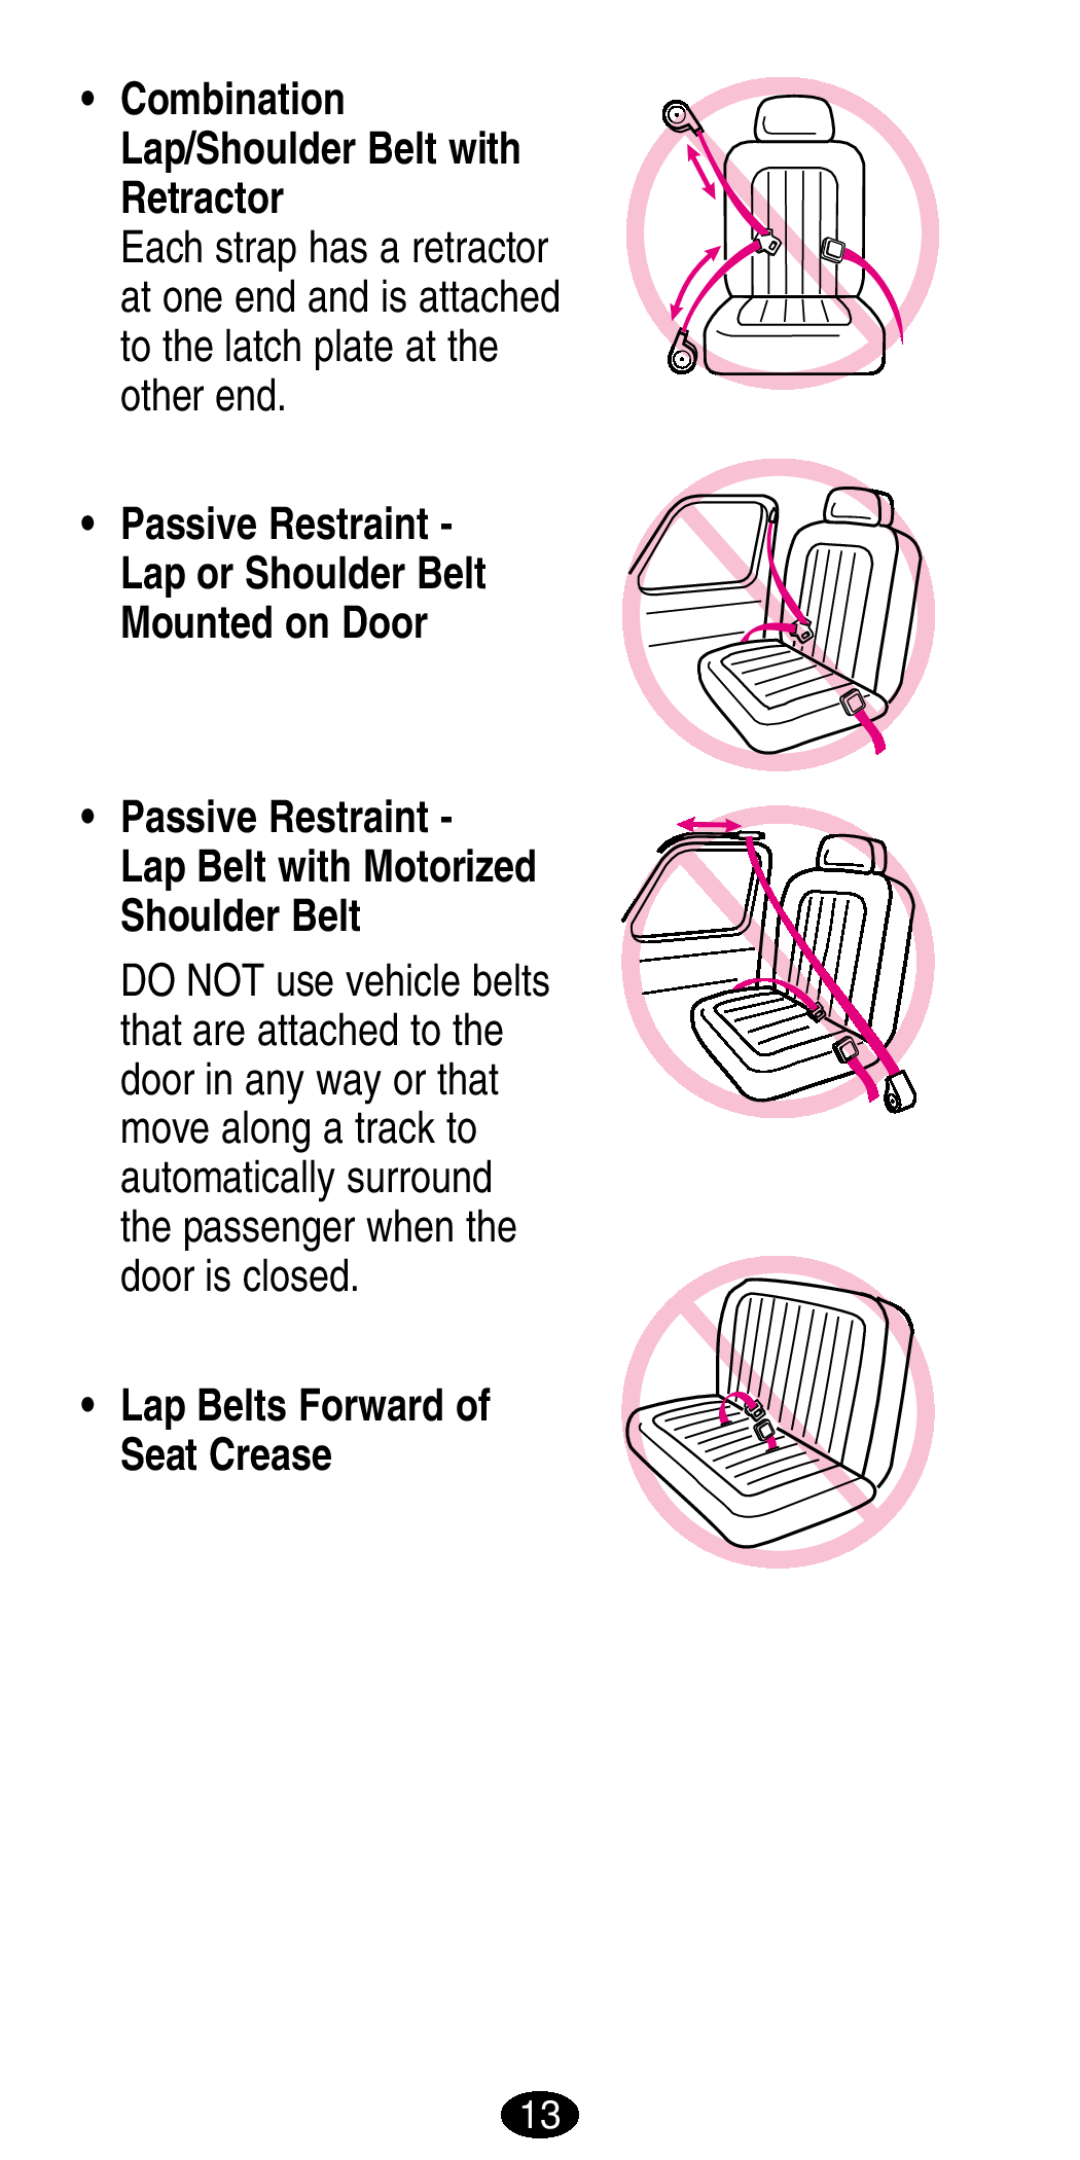 Graco 8486, 8490 manual Combination Lap/Shoulder Belt with Retractor, Lap Belts Forward of Seat Crease 